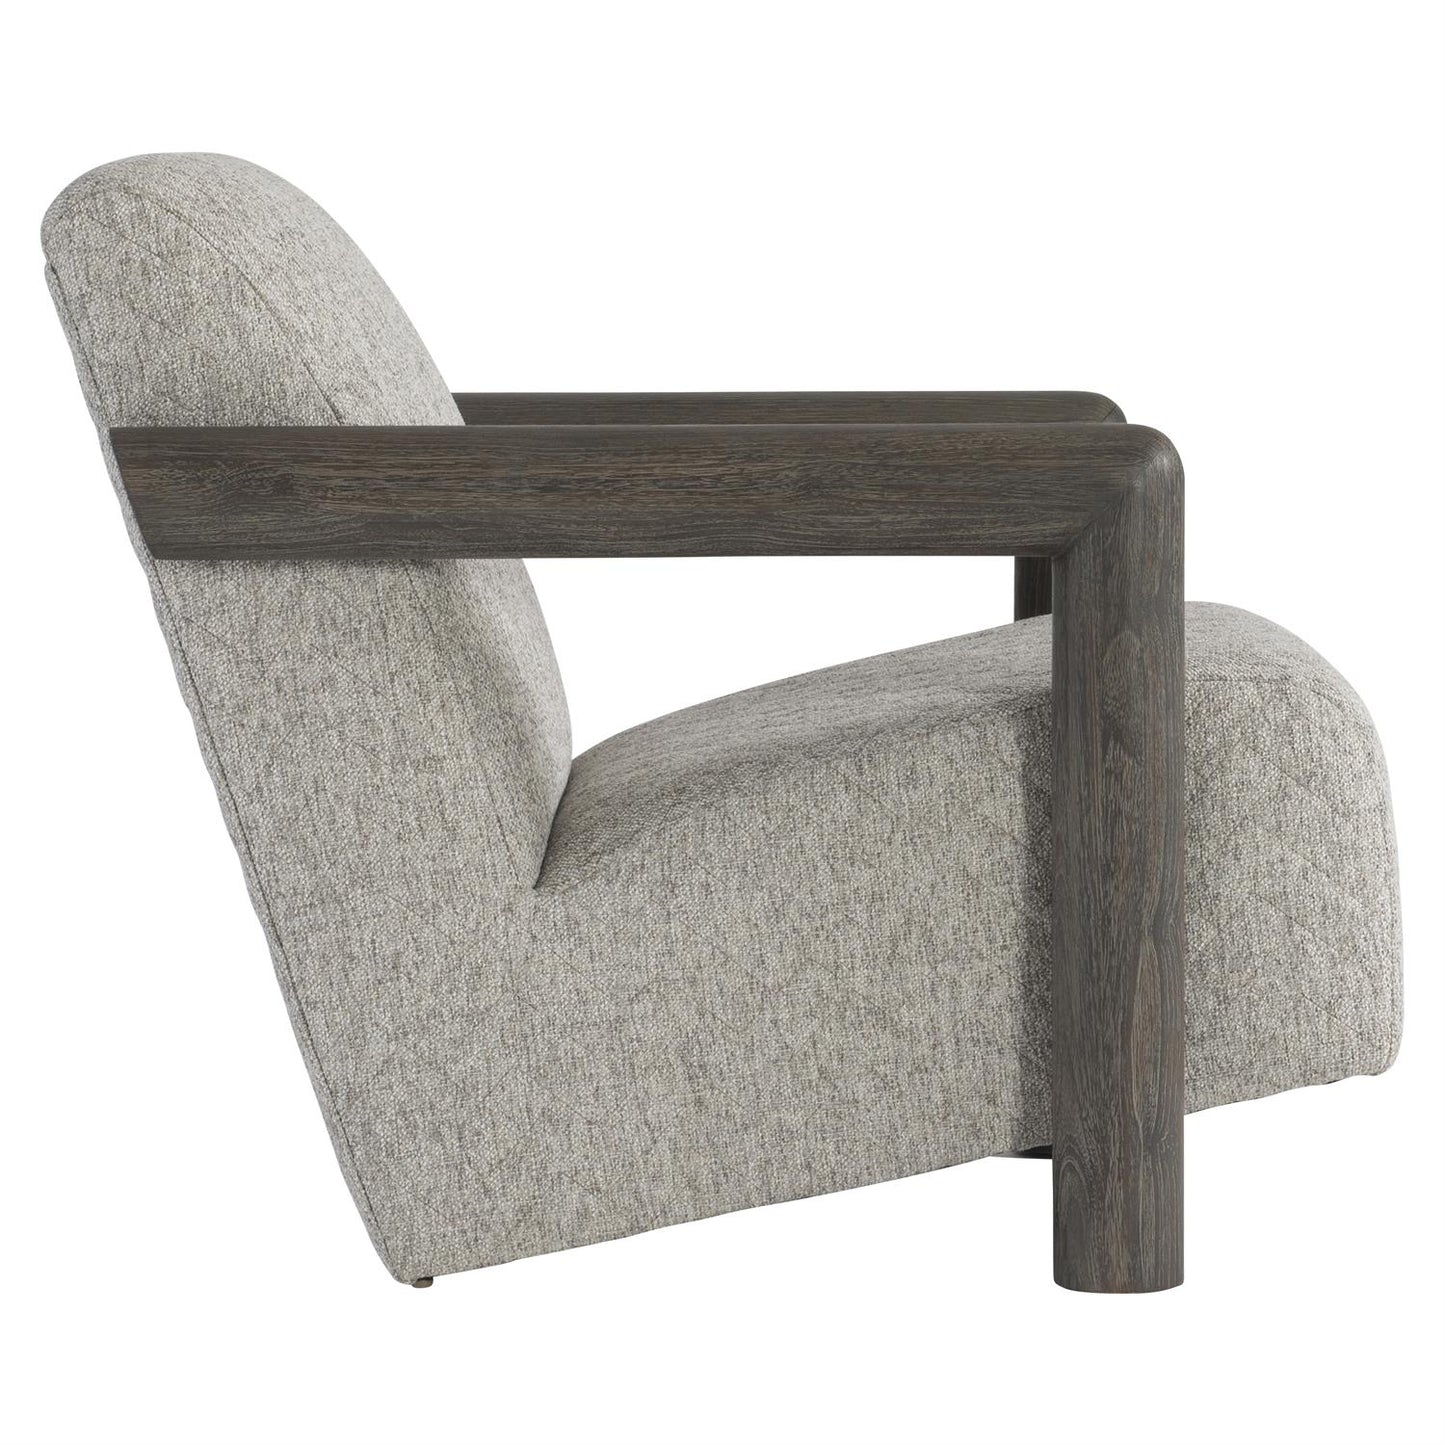 Ord Smoked Truffle Fabric Chair